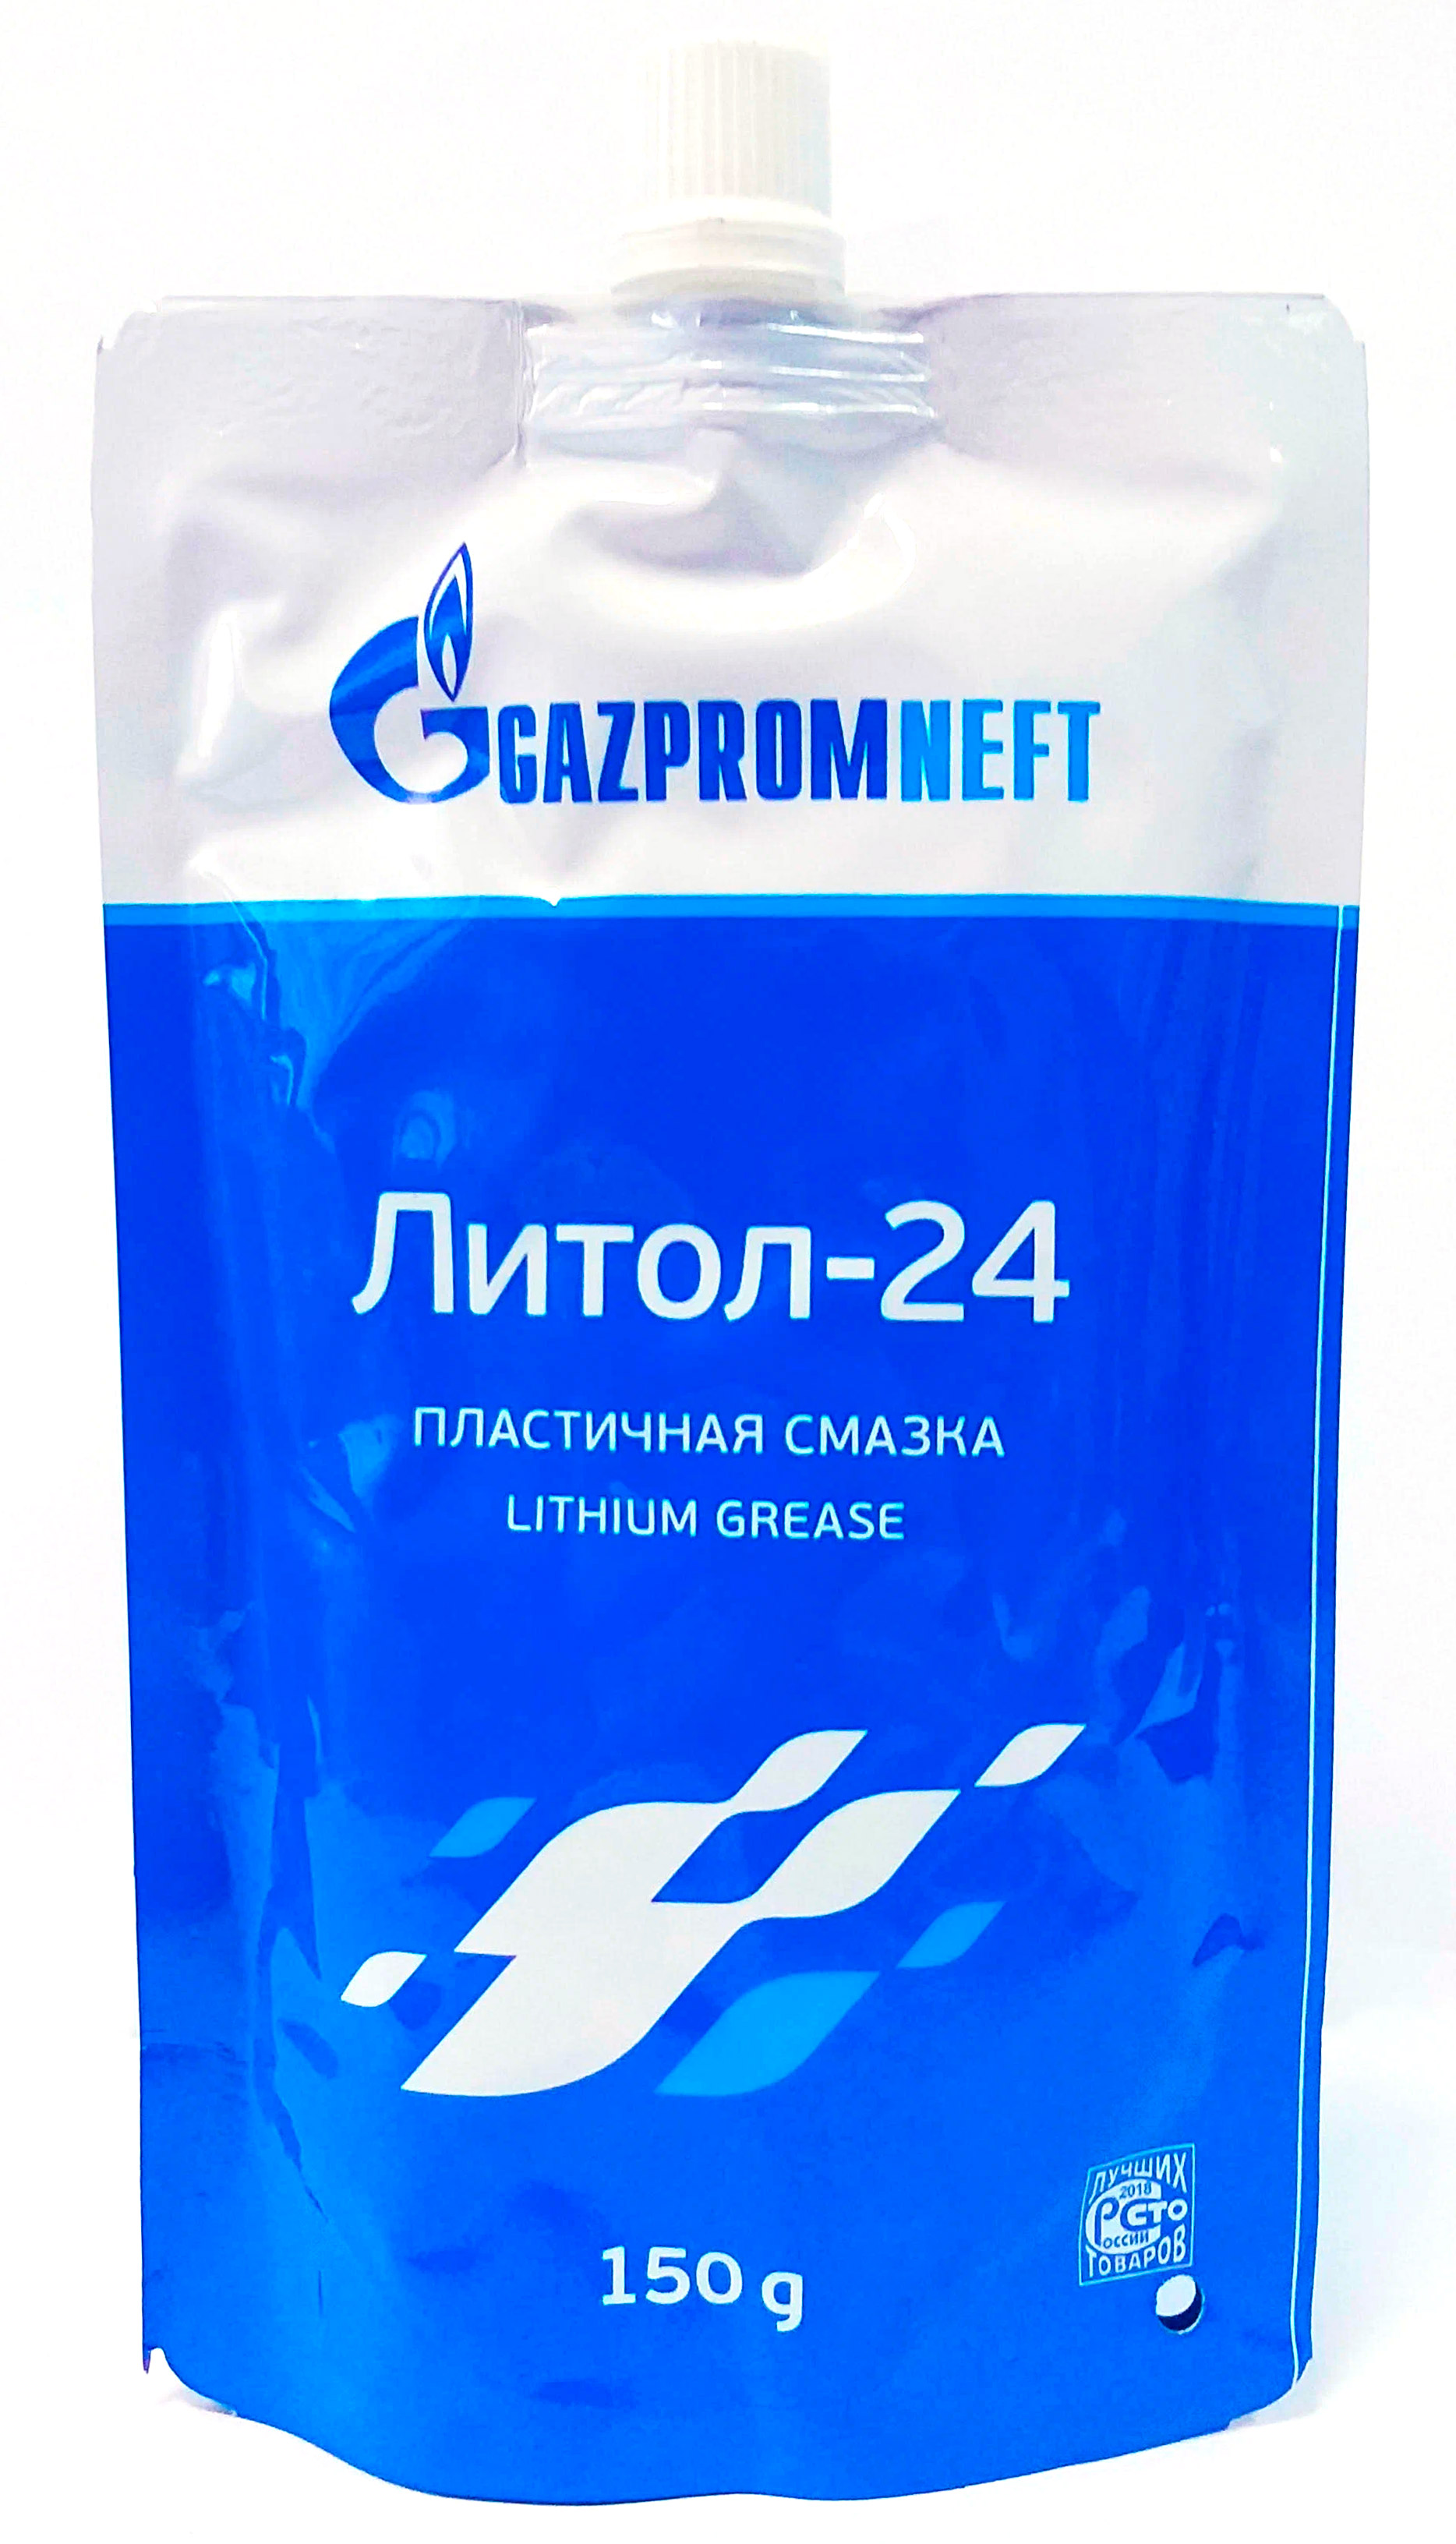 Присадки / Автохимия Смазка литол-24 Gazpromneft 150гр.